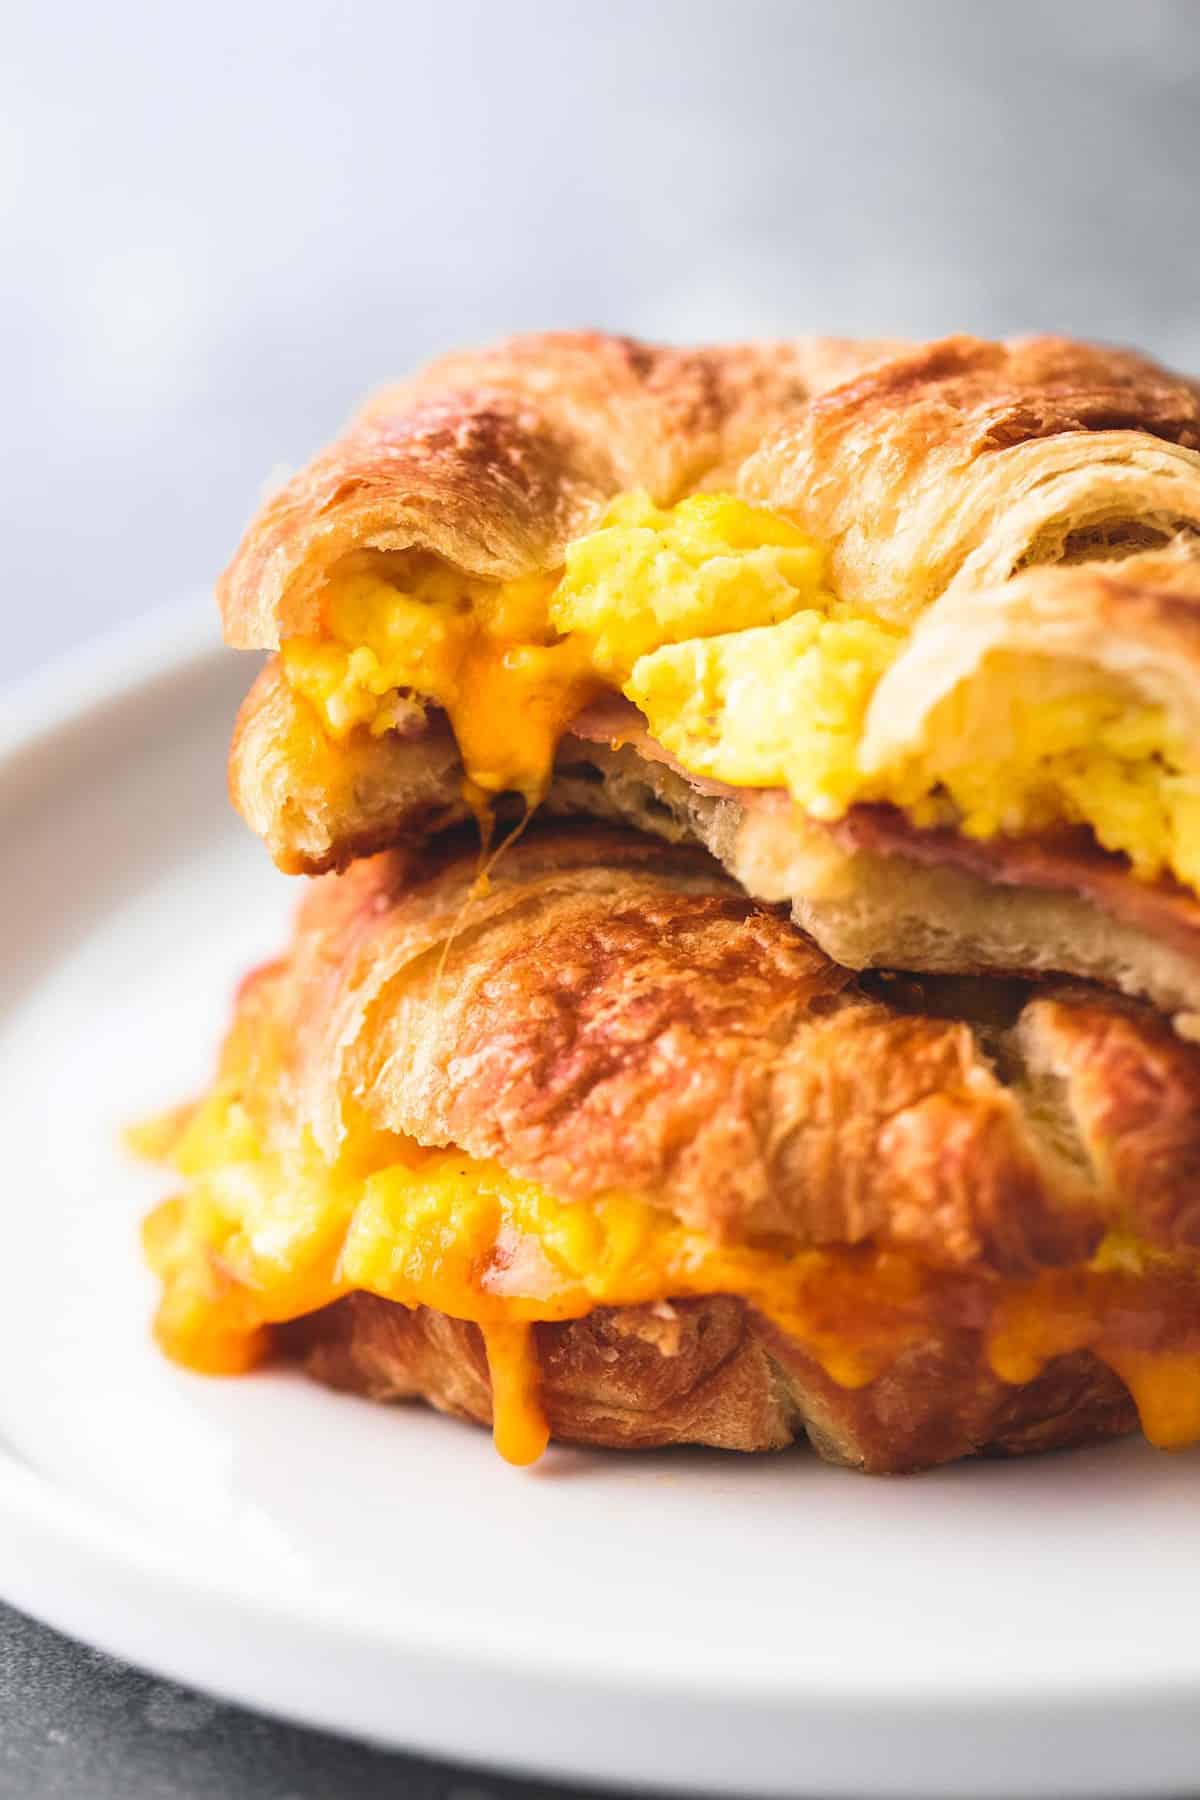 https://www.lecremedelacrumb.com/wp-content/uploads/2018/04/baked-croissant-breakfast-sandwiches-103.jpg